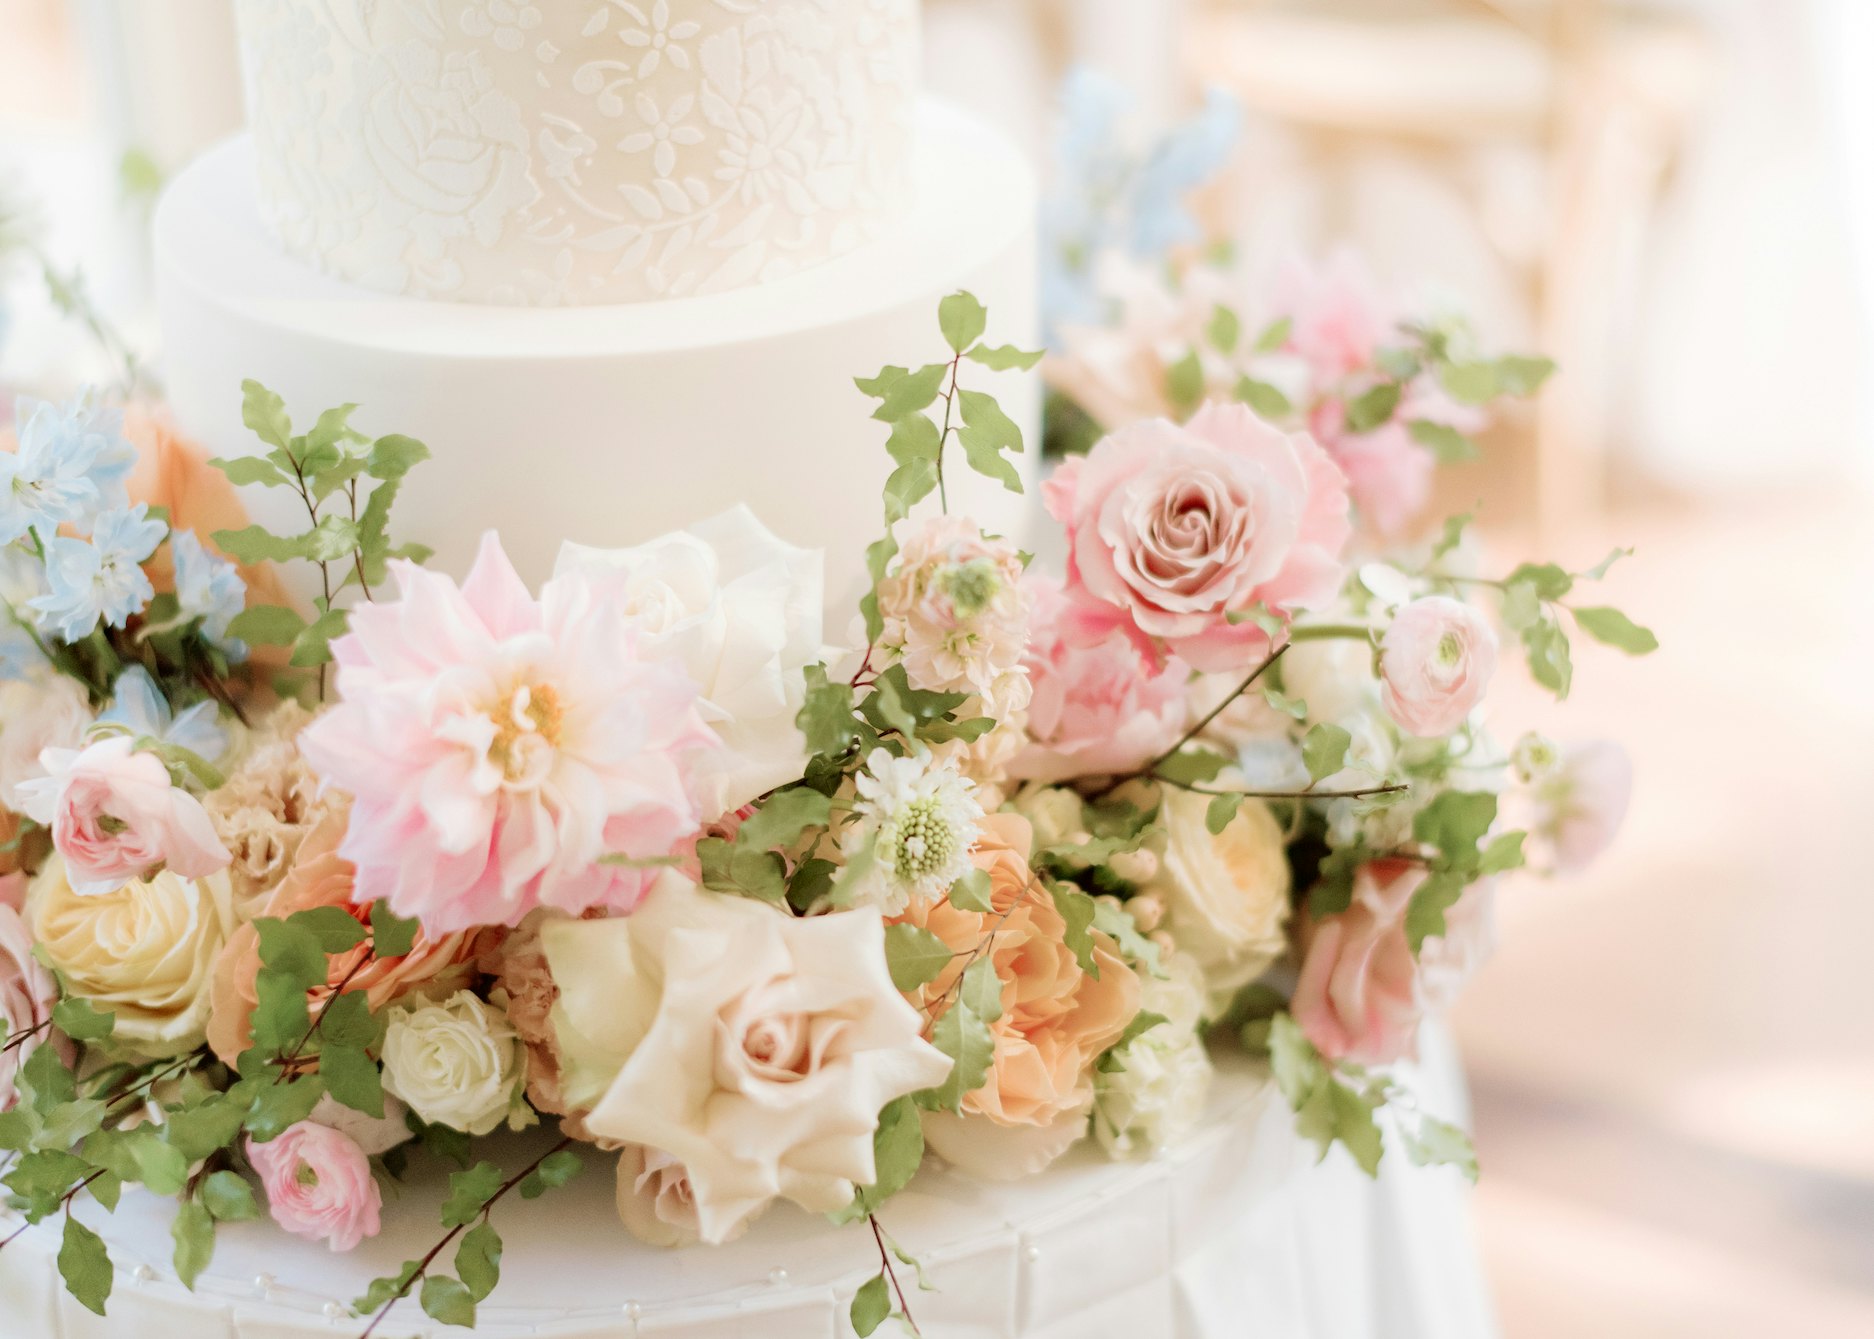 Wedding cake with flowers